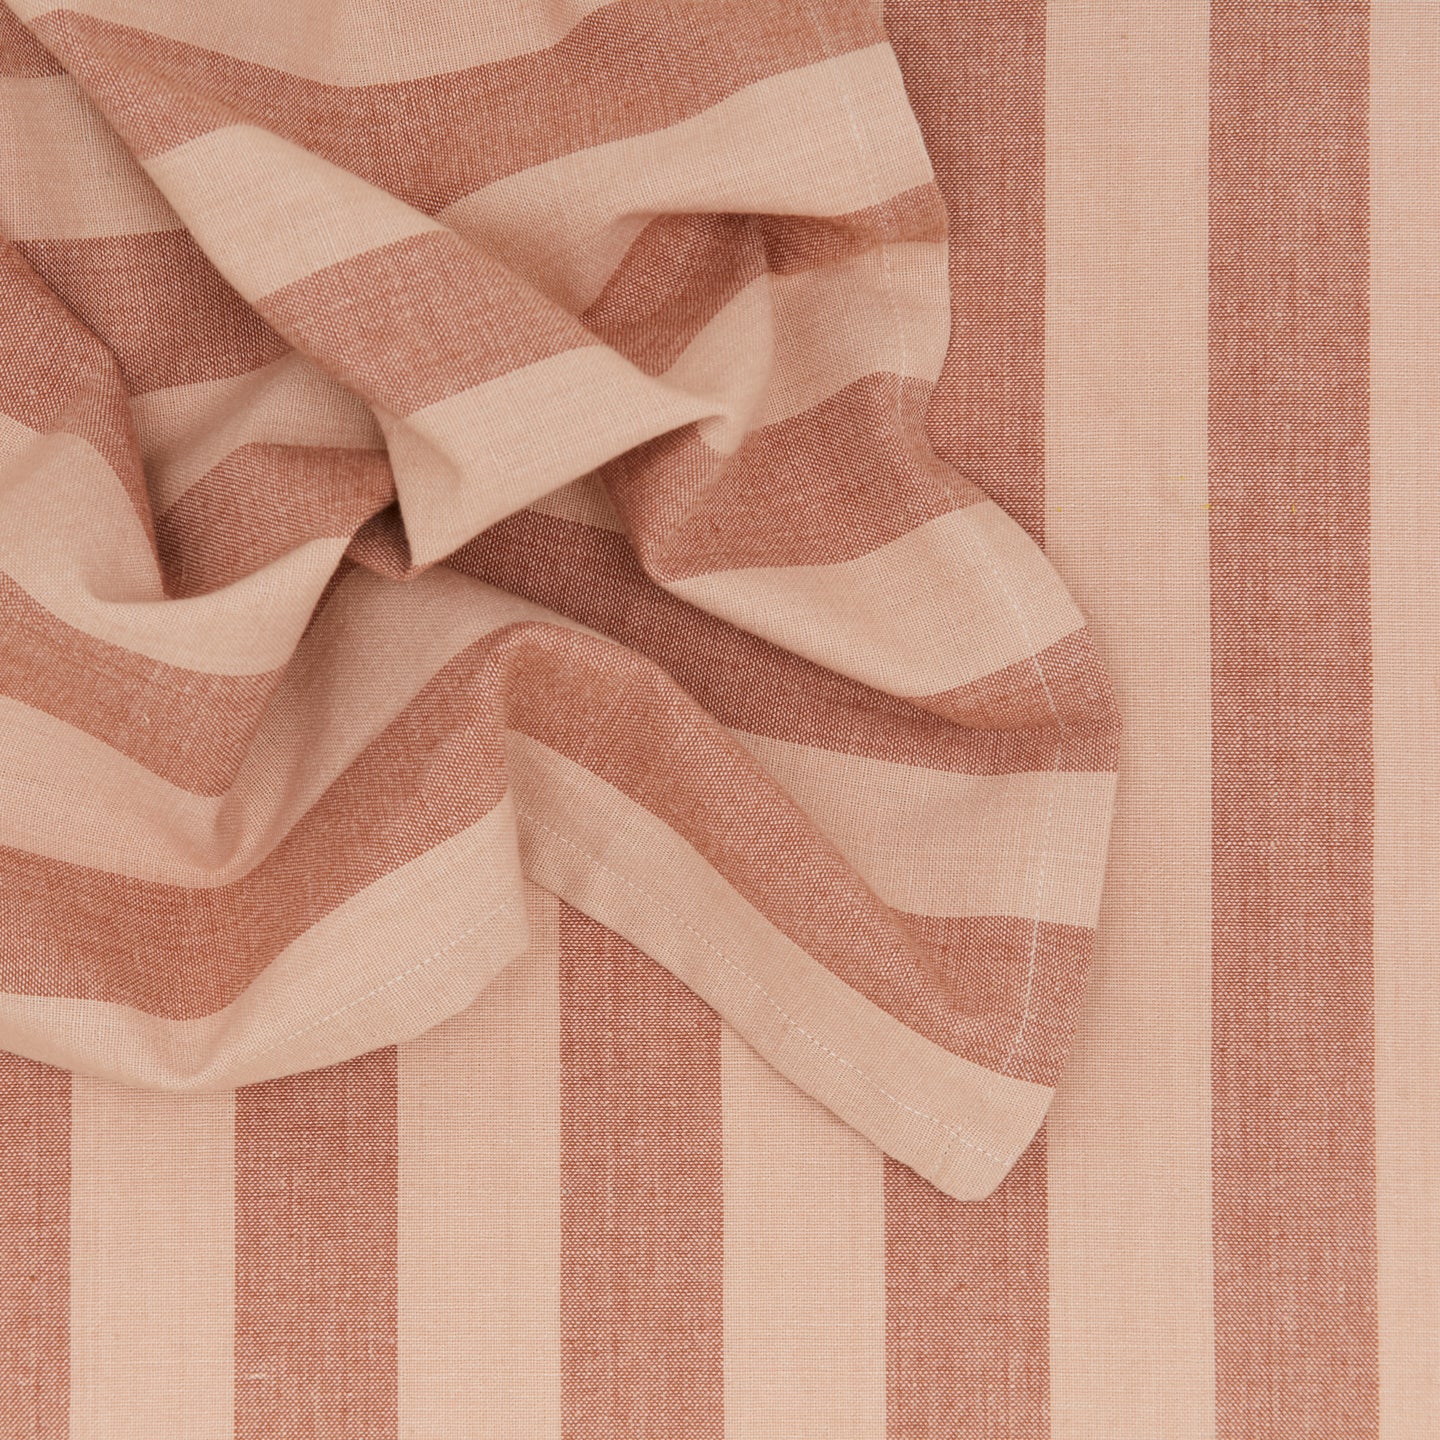 Essential Striped Dinner Napkin, Set of 4 - Blush/Terracotta